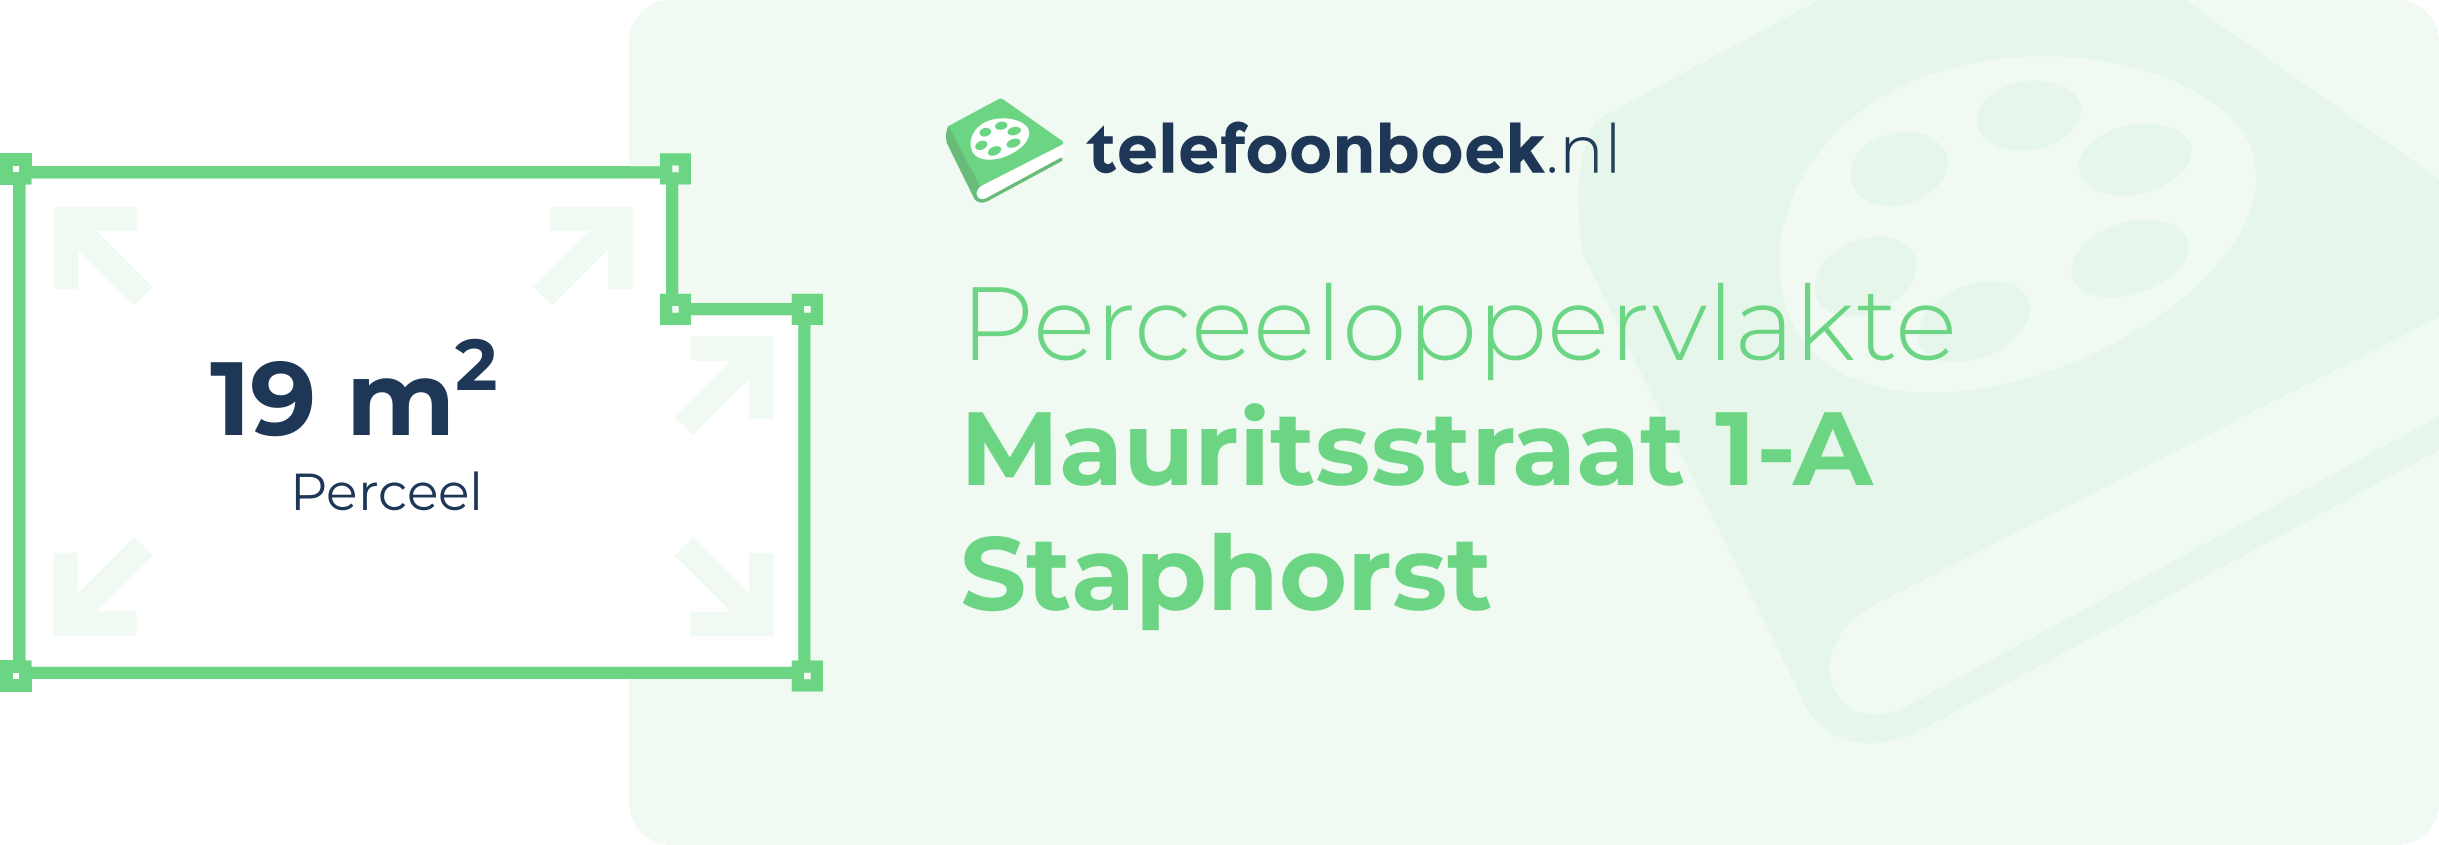 Perceeloppervlakte Mauritsstraat 1-A Staphorst